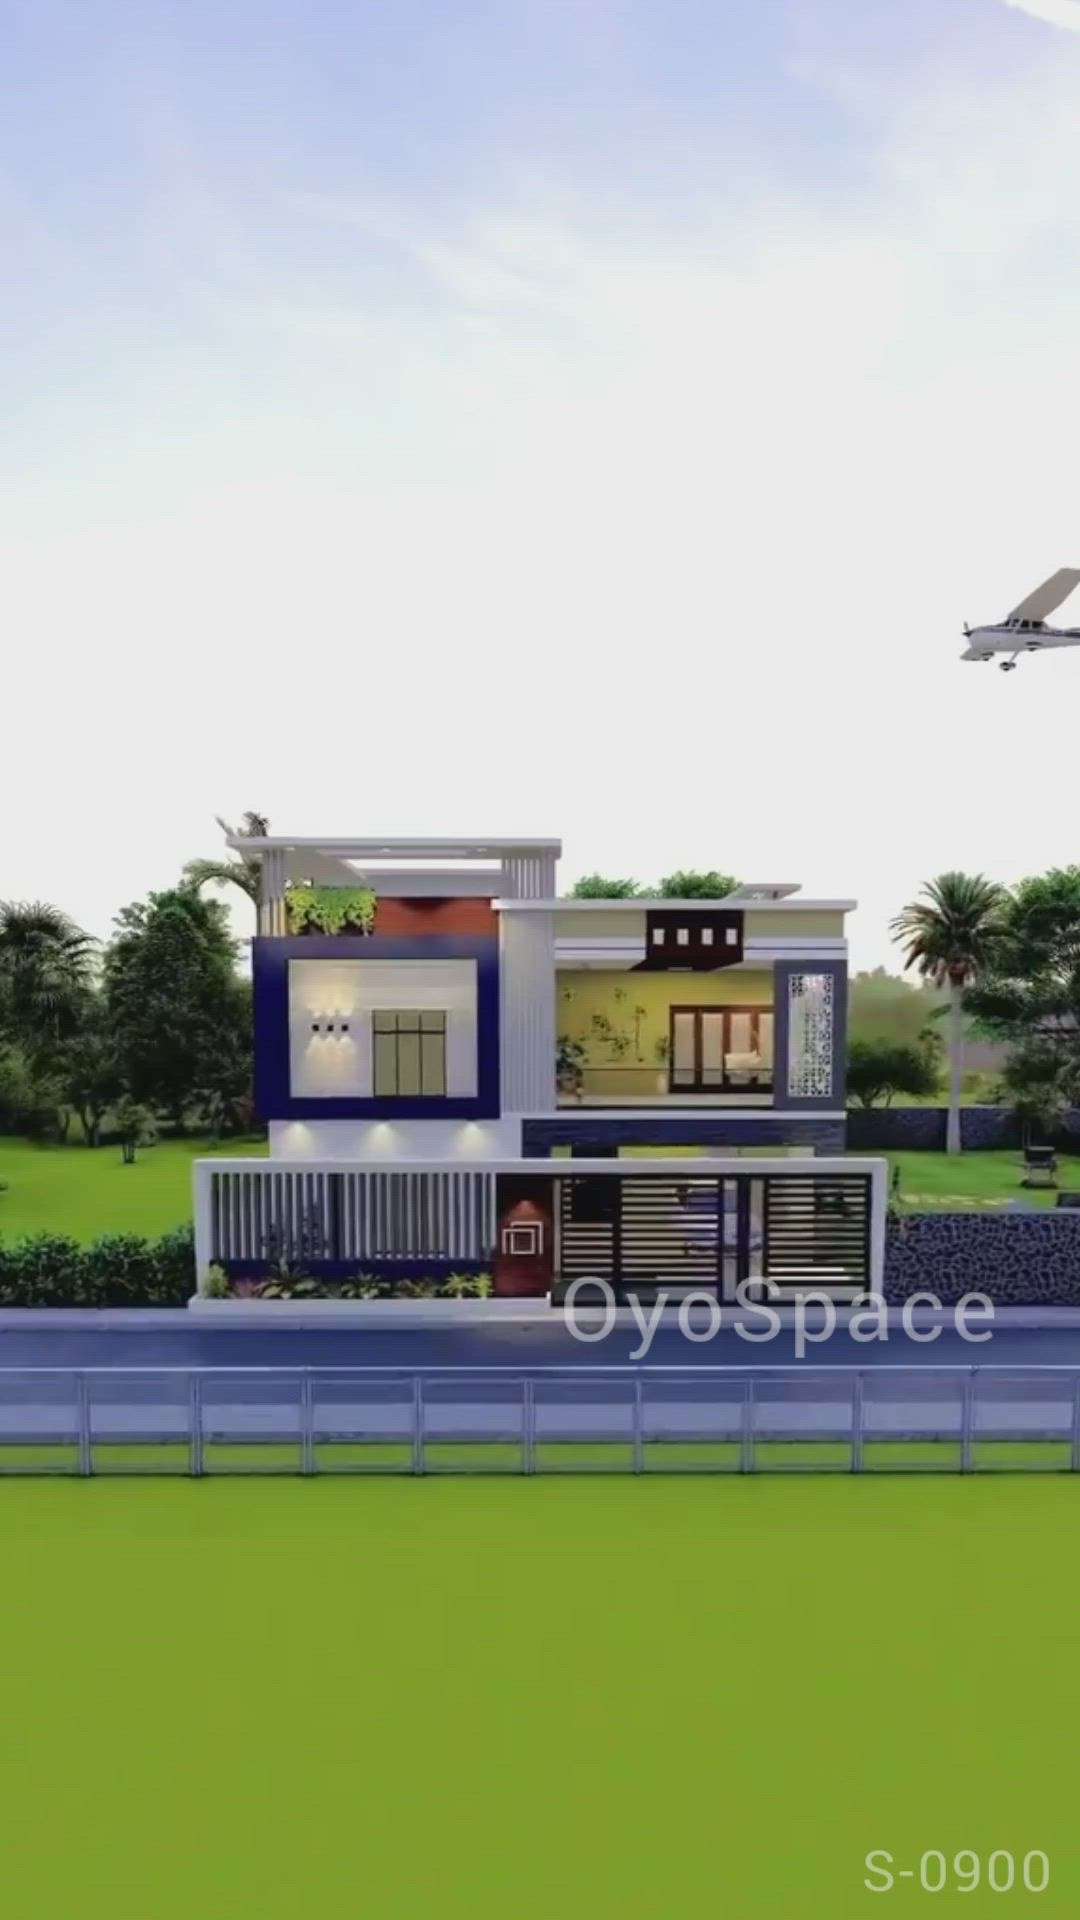 #oyospace #buy #rent #sell #realestateindia   #properties #mahendravivrekar #kolopost #bhopal #indiadesign #khushyokichaabi #mp #house #homedesigne #residential #commercialproperty #vila